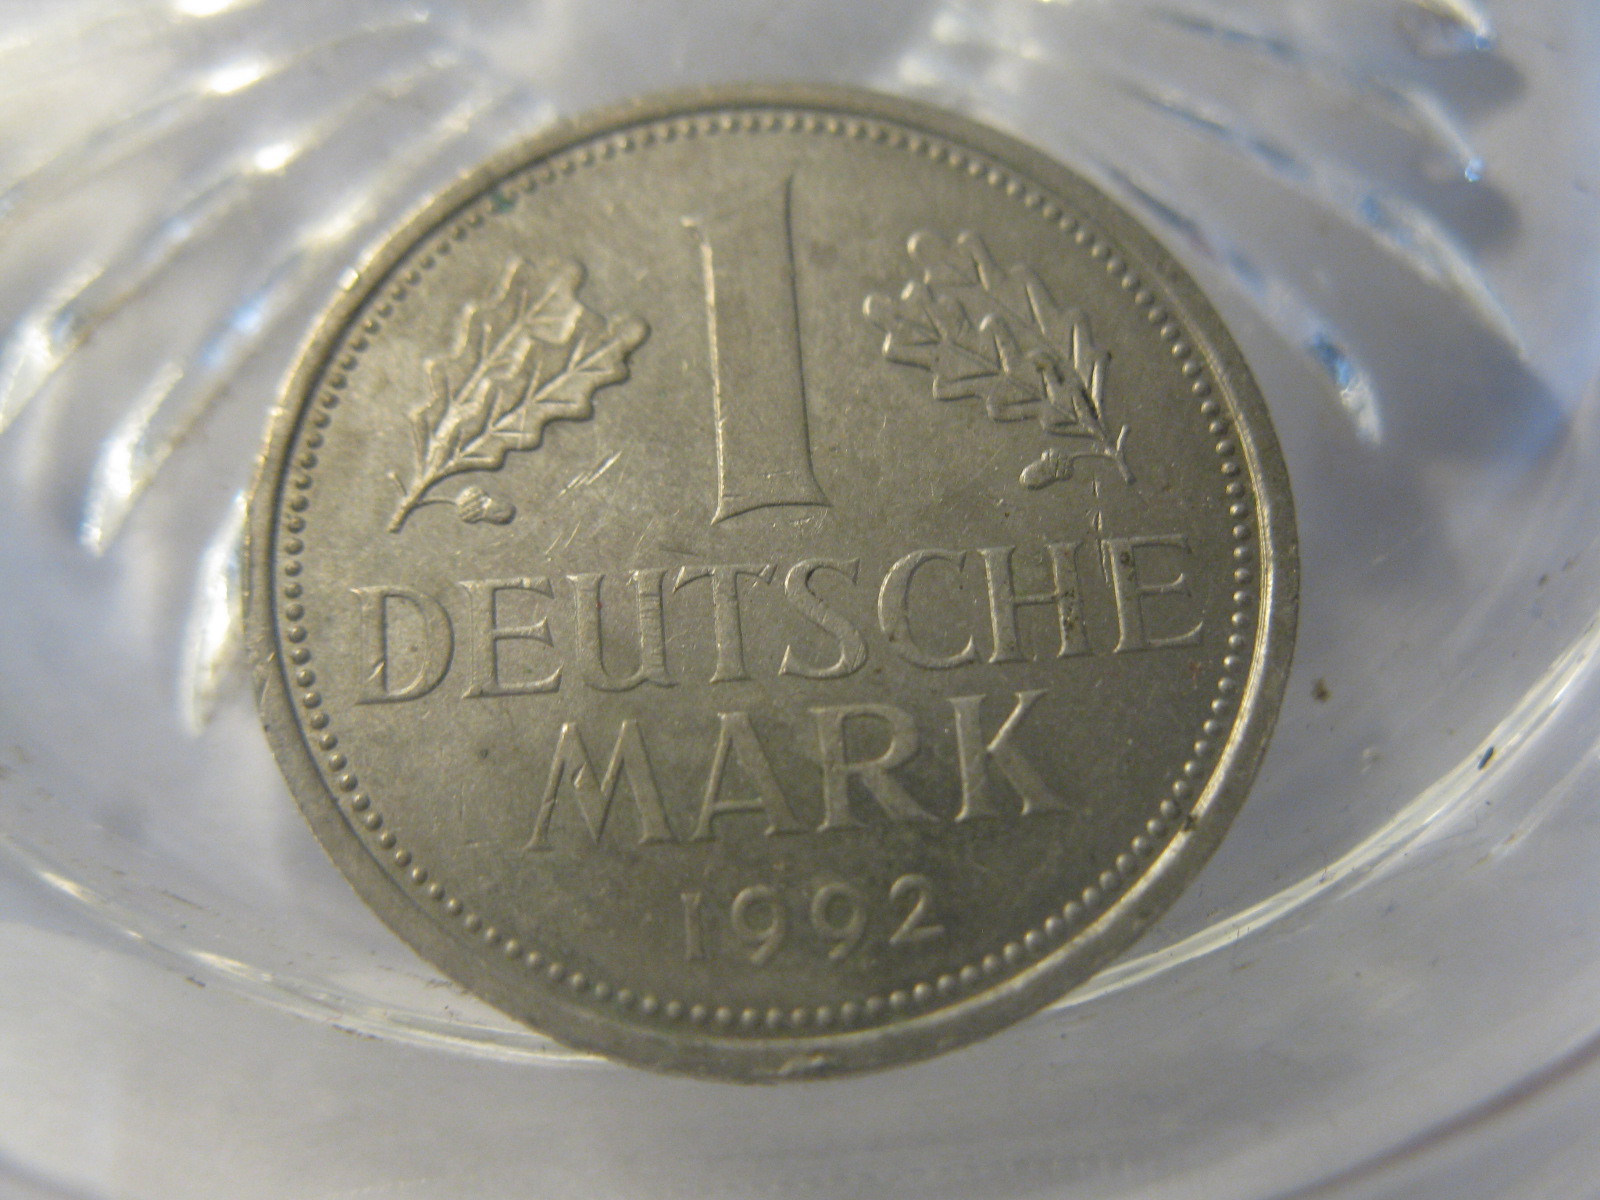 (FC-813) 1992-J Germany: 1 Deutsche Mark - $1.50